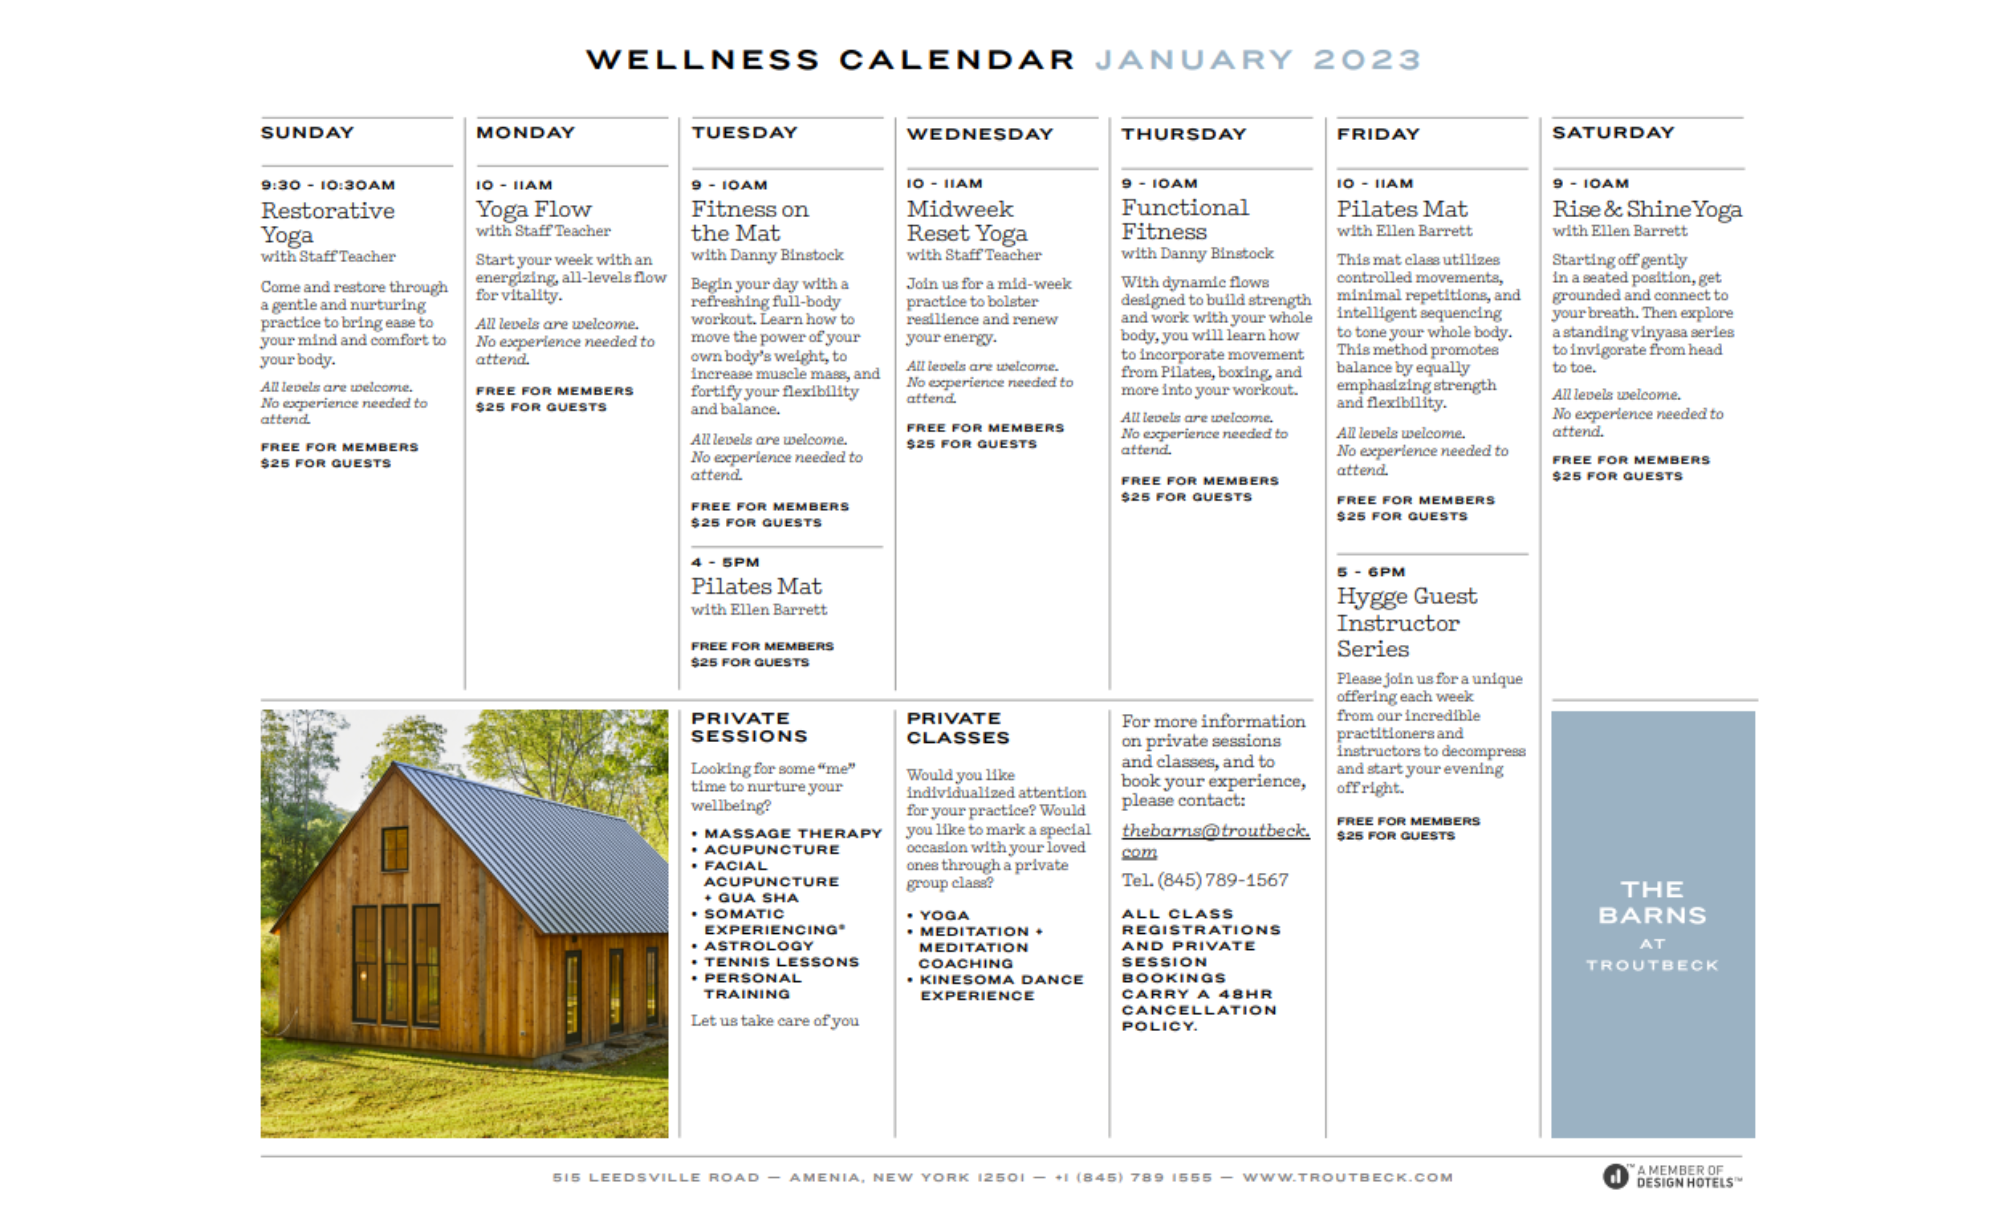 January Wellness Calendar  Troutbeck, Amenia New York